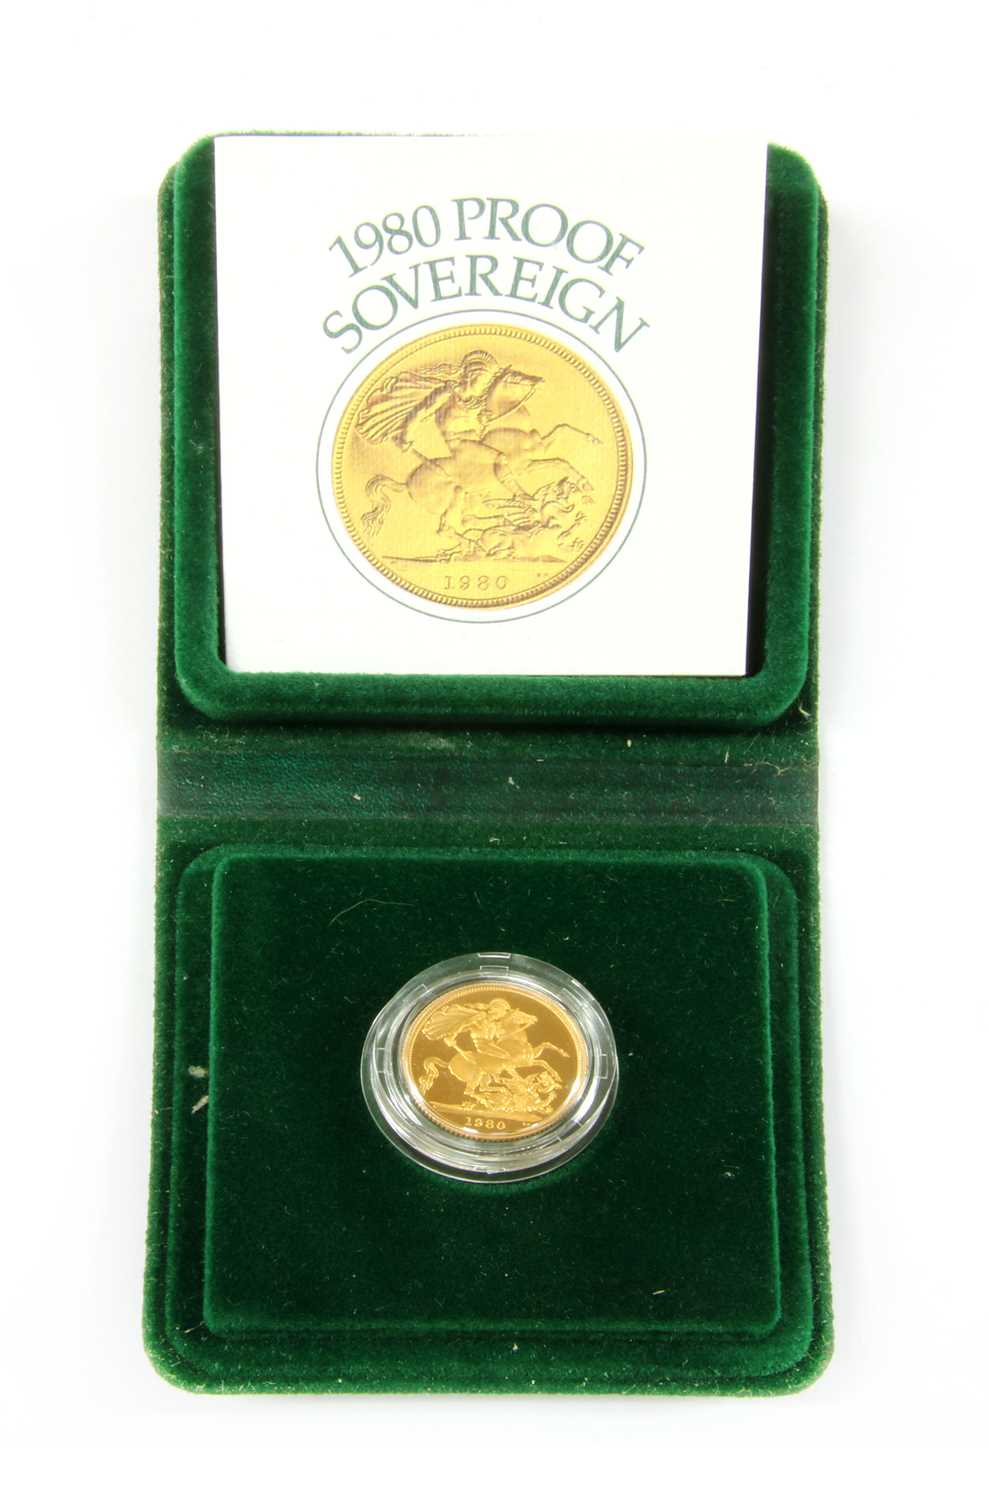 Coins, Great Britain, Elizabeth II (1952-), - Image 2 of 2